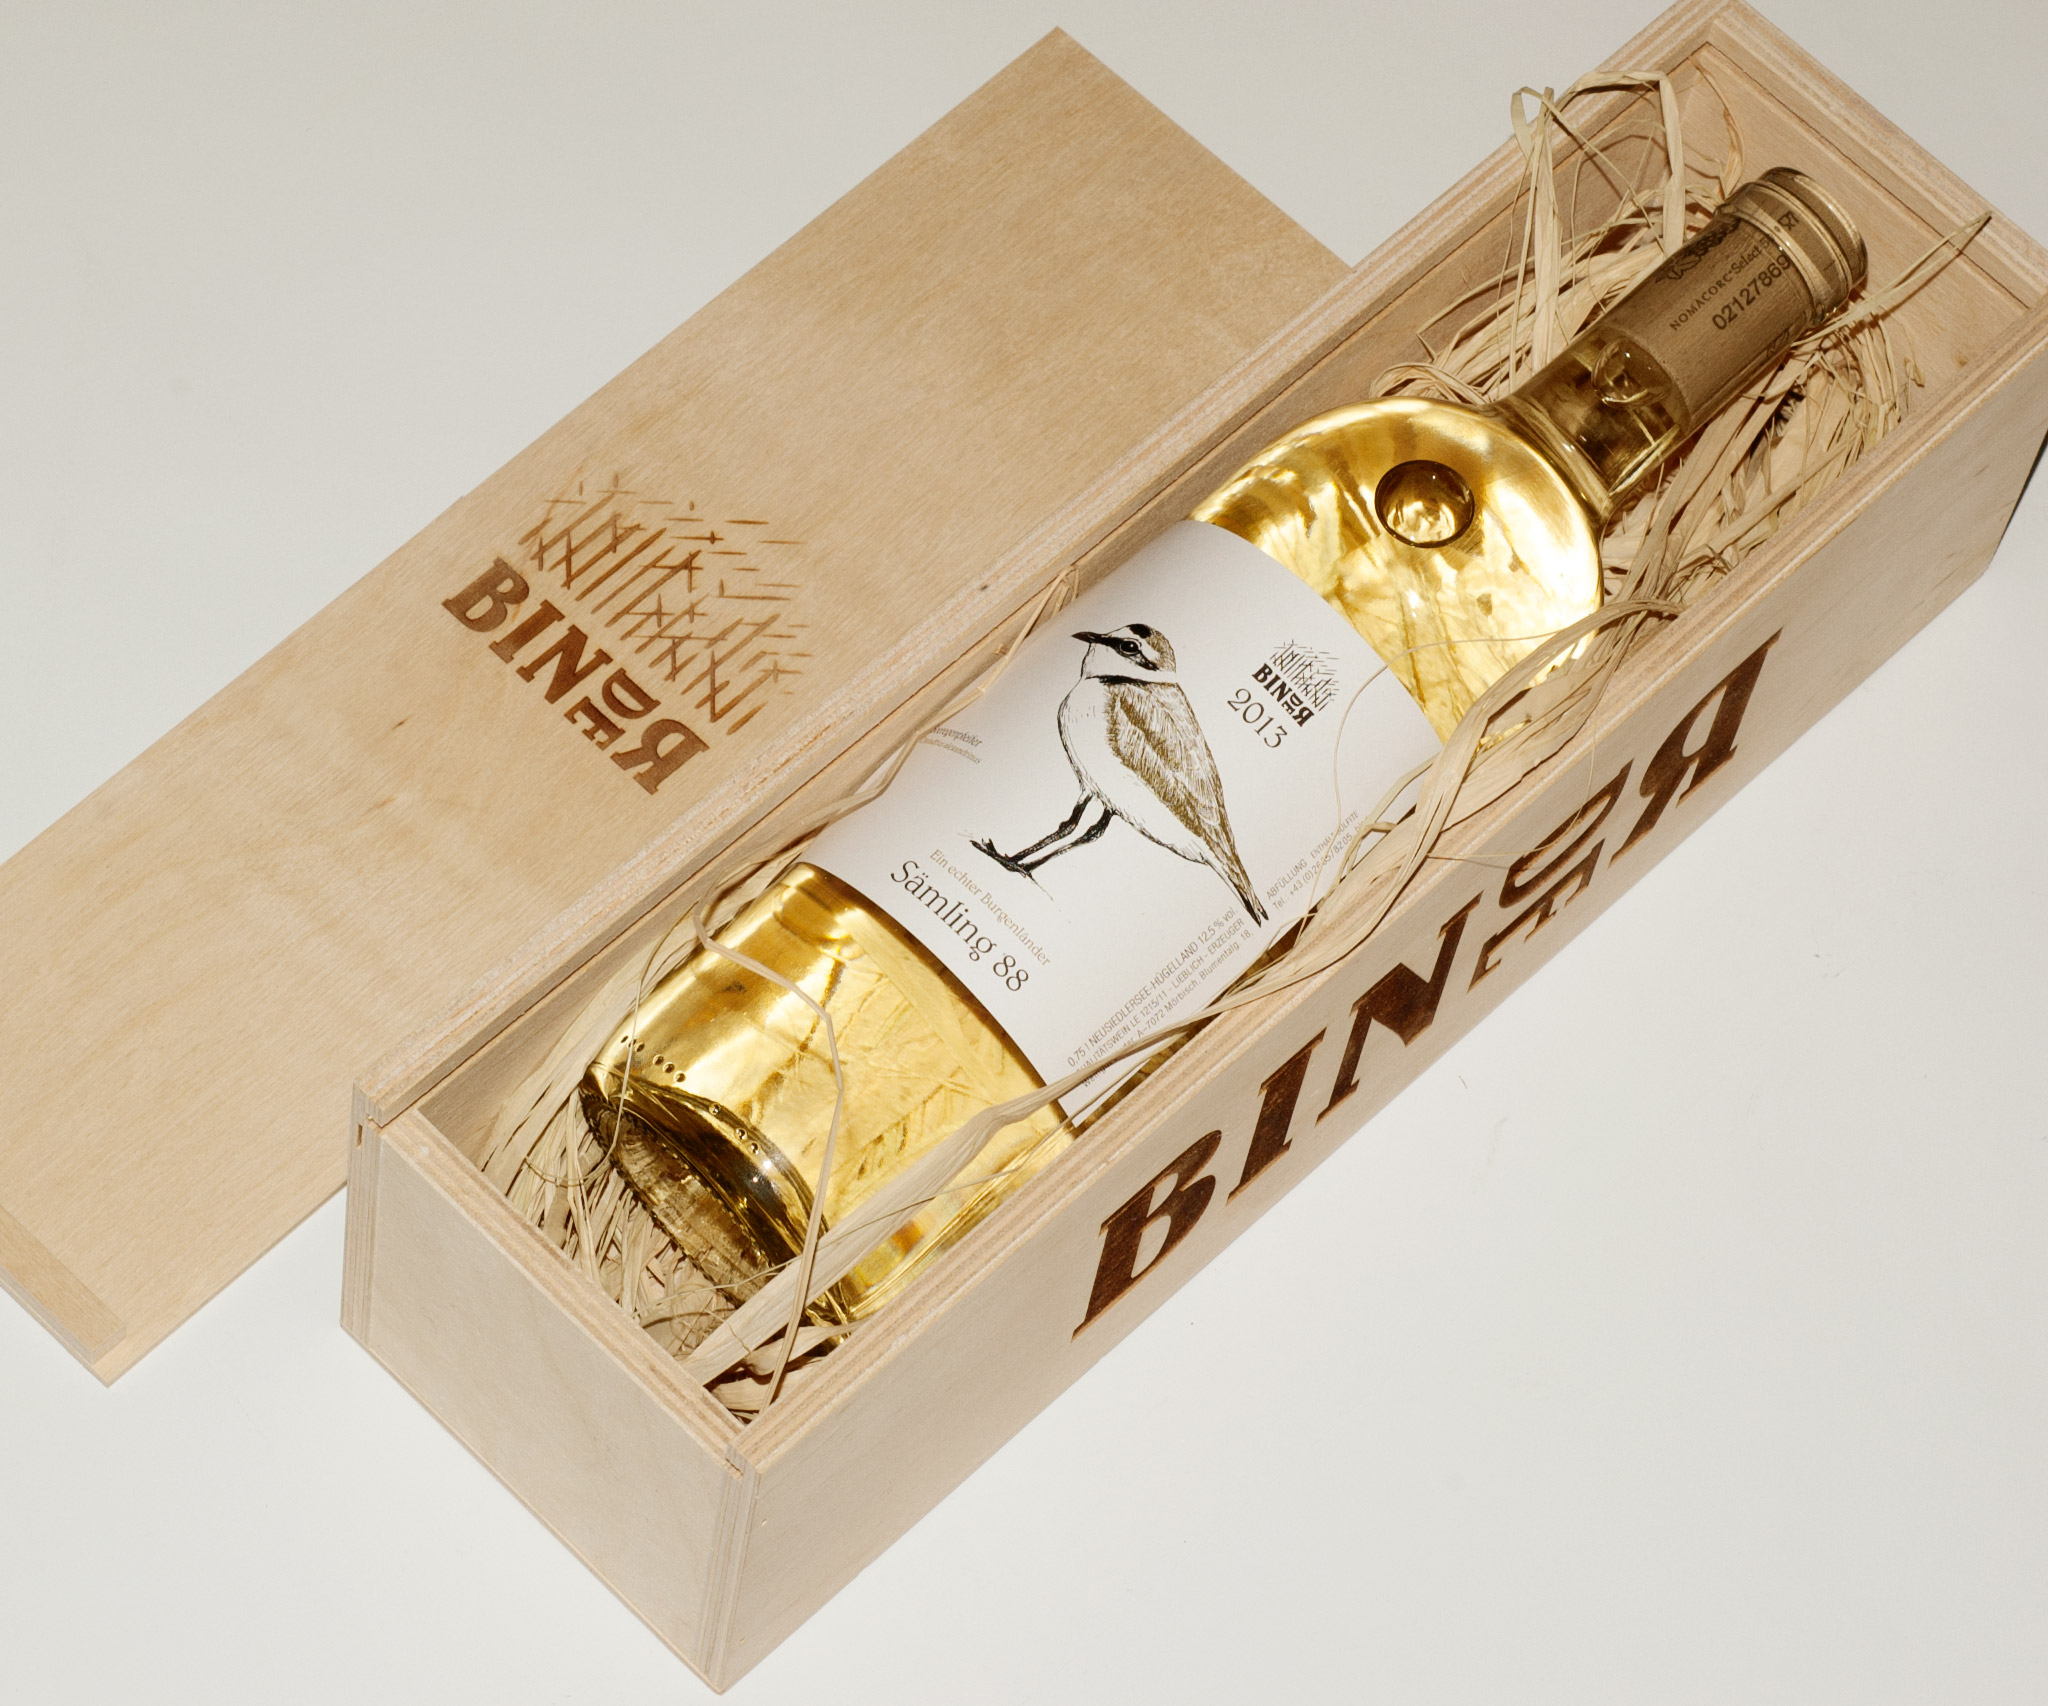 Bottle of Binder whitewine in a wooden box